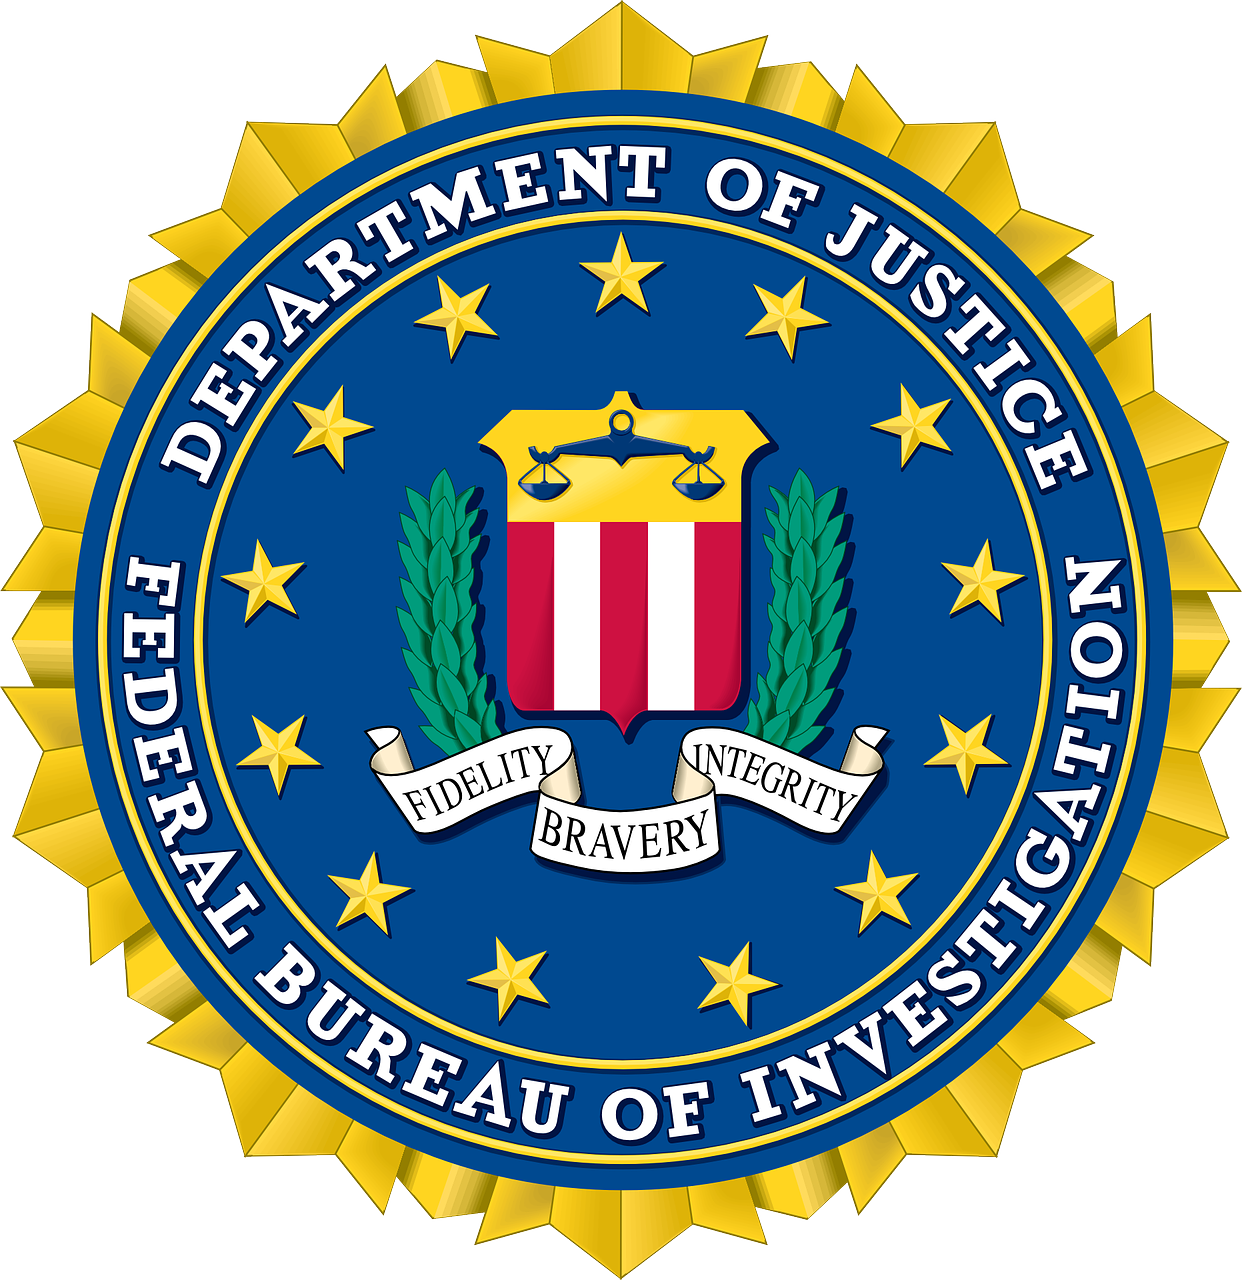 「Proofpoint Blog 第12回 「FBIのIC3レポート:2021年、電子メール詐欺による経済的損失が過去最高を記録」